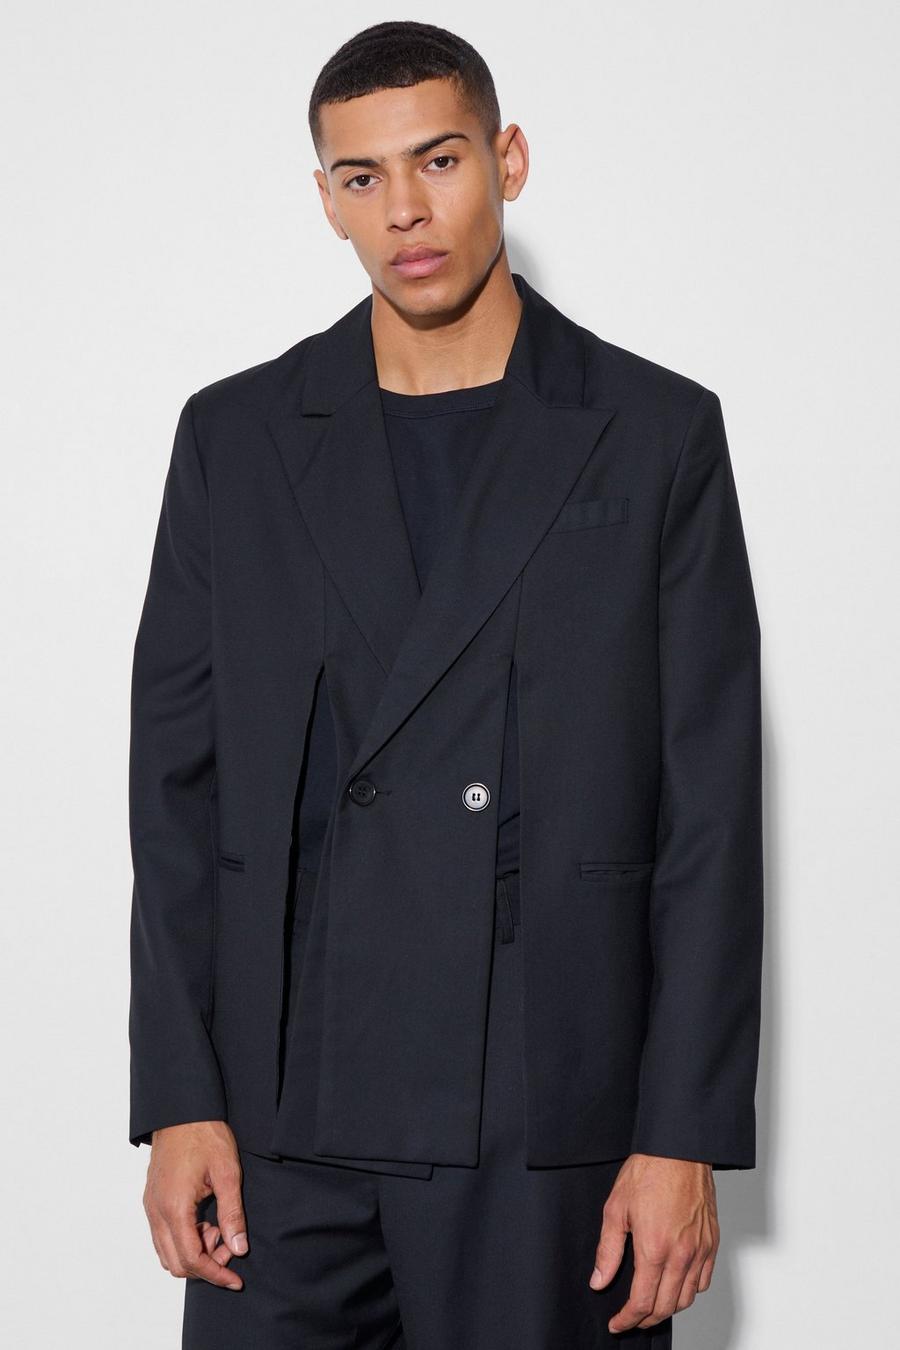 Black Split Hem Oversized Suit Jacket